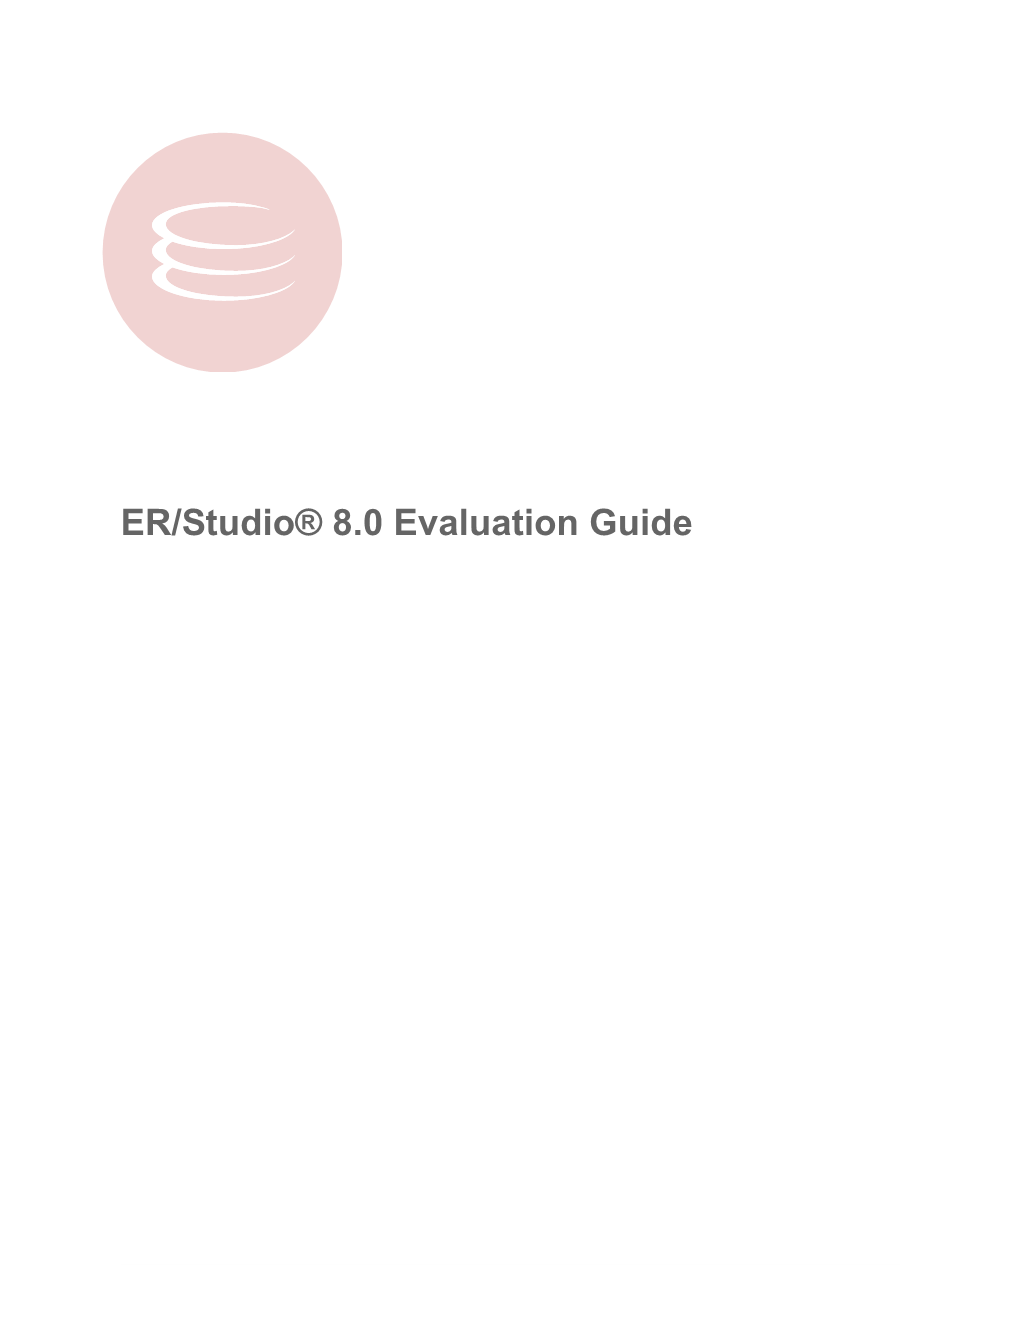 ER/Studio® 8.0 Evaluation Guide Copyright © 1994-2008 Embarcadero Technologies, Inc